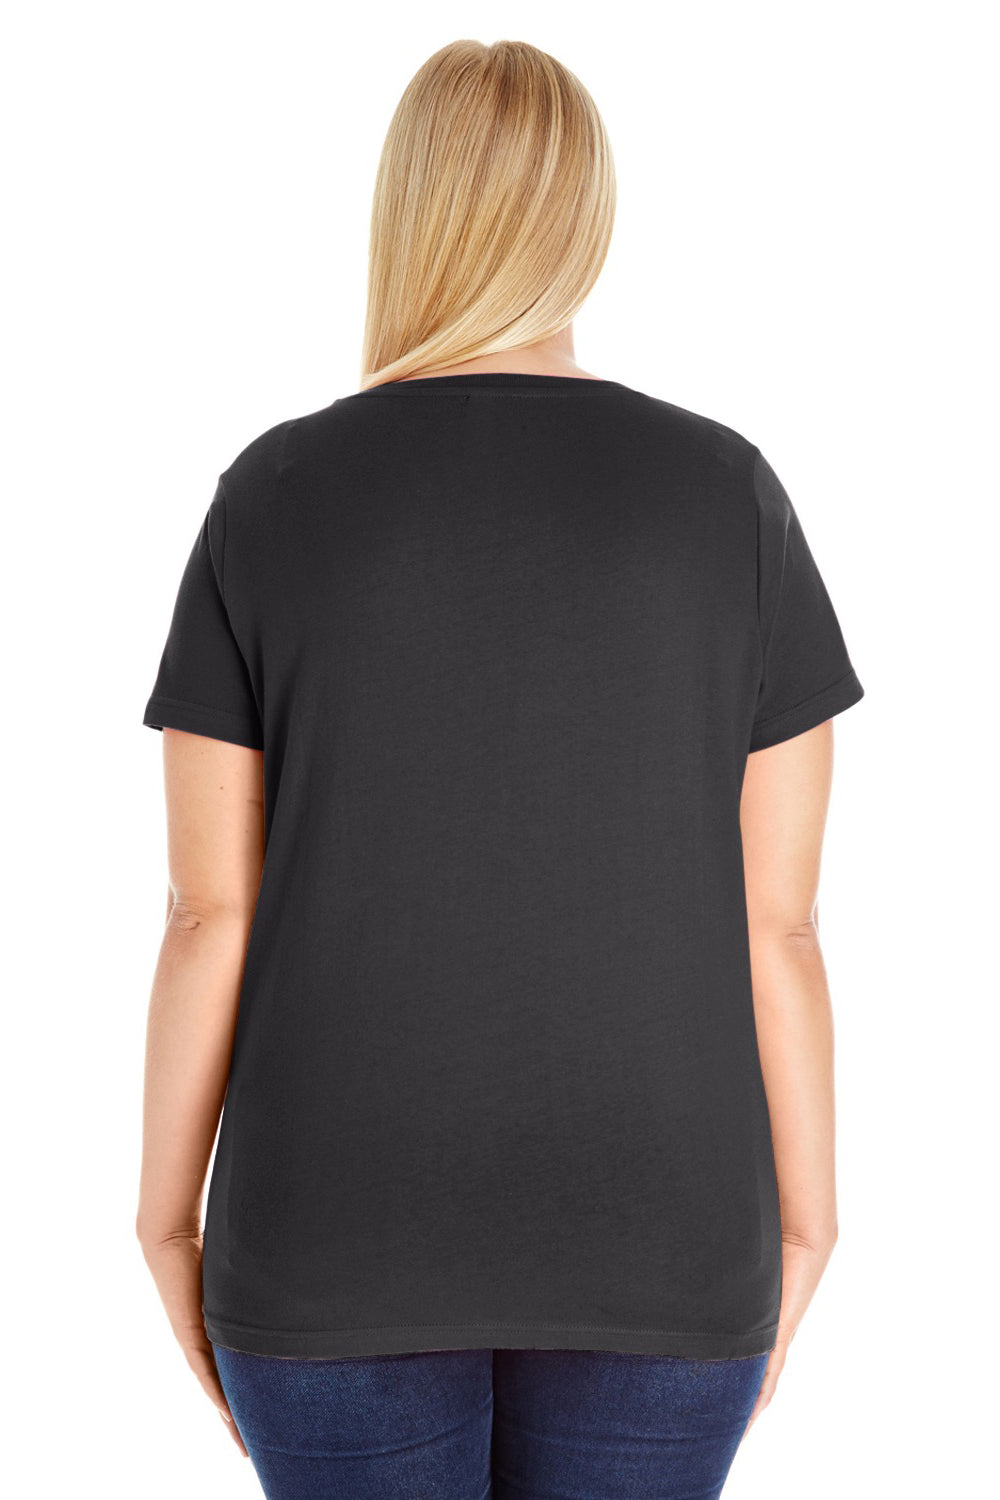 LAT 3804 Womens Premium Jersey Short Sleeve Scoop Neck T-Shirt Black Back